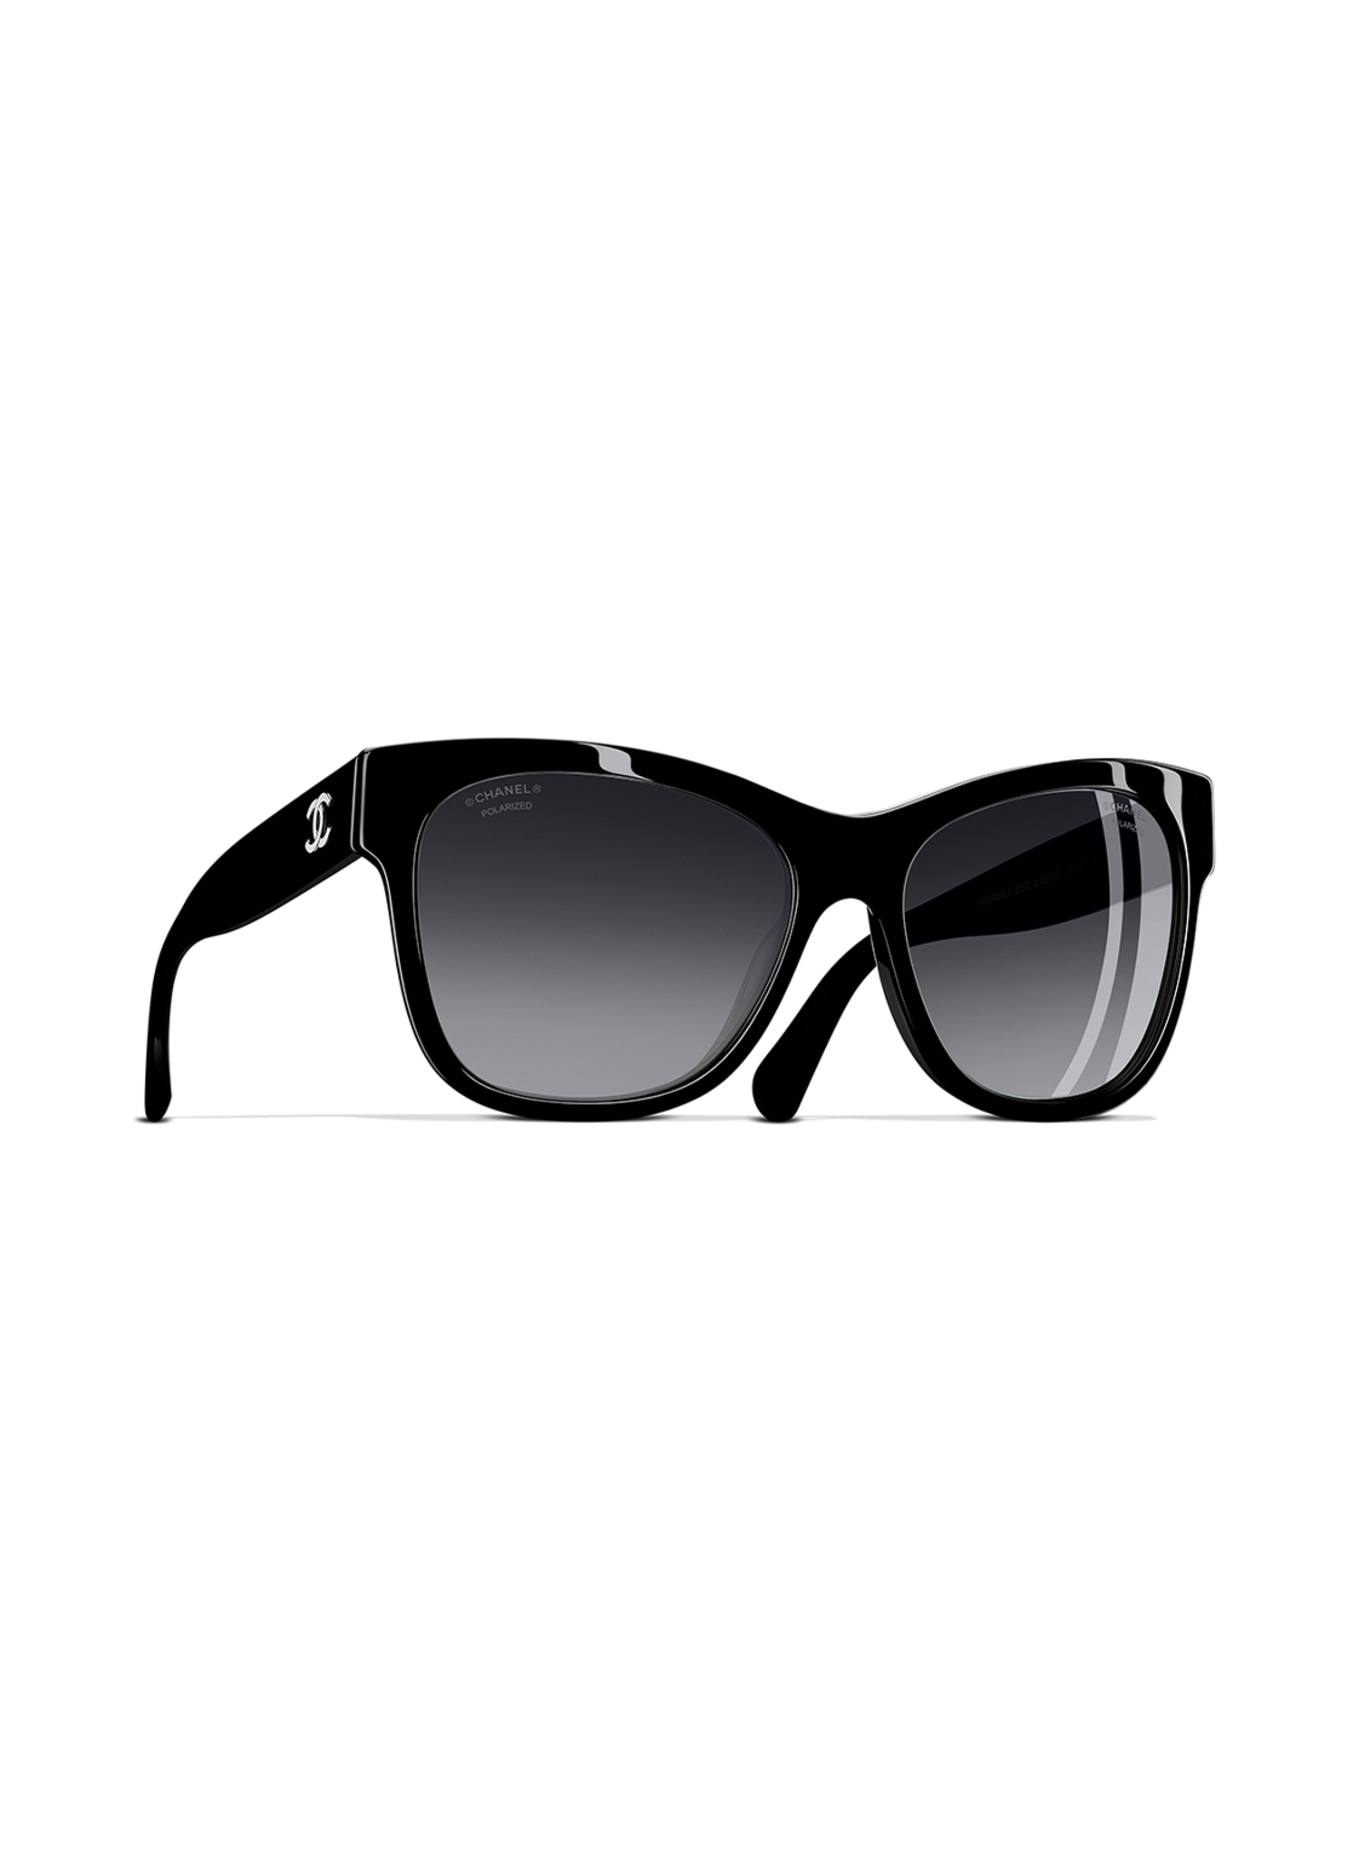 120 Best Chanel Sunglasses ideas  chanel sunglasses, sunglasses